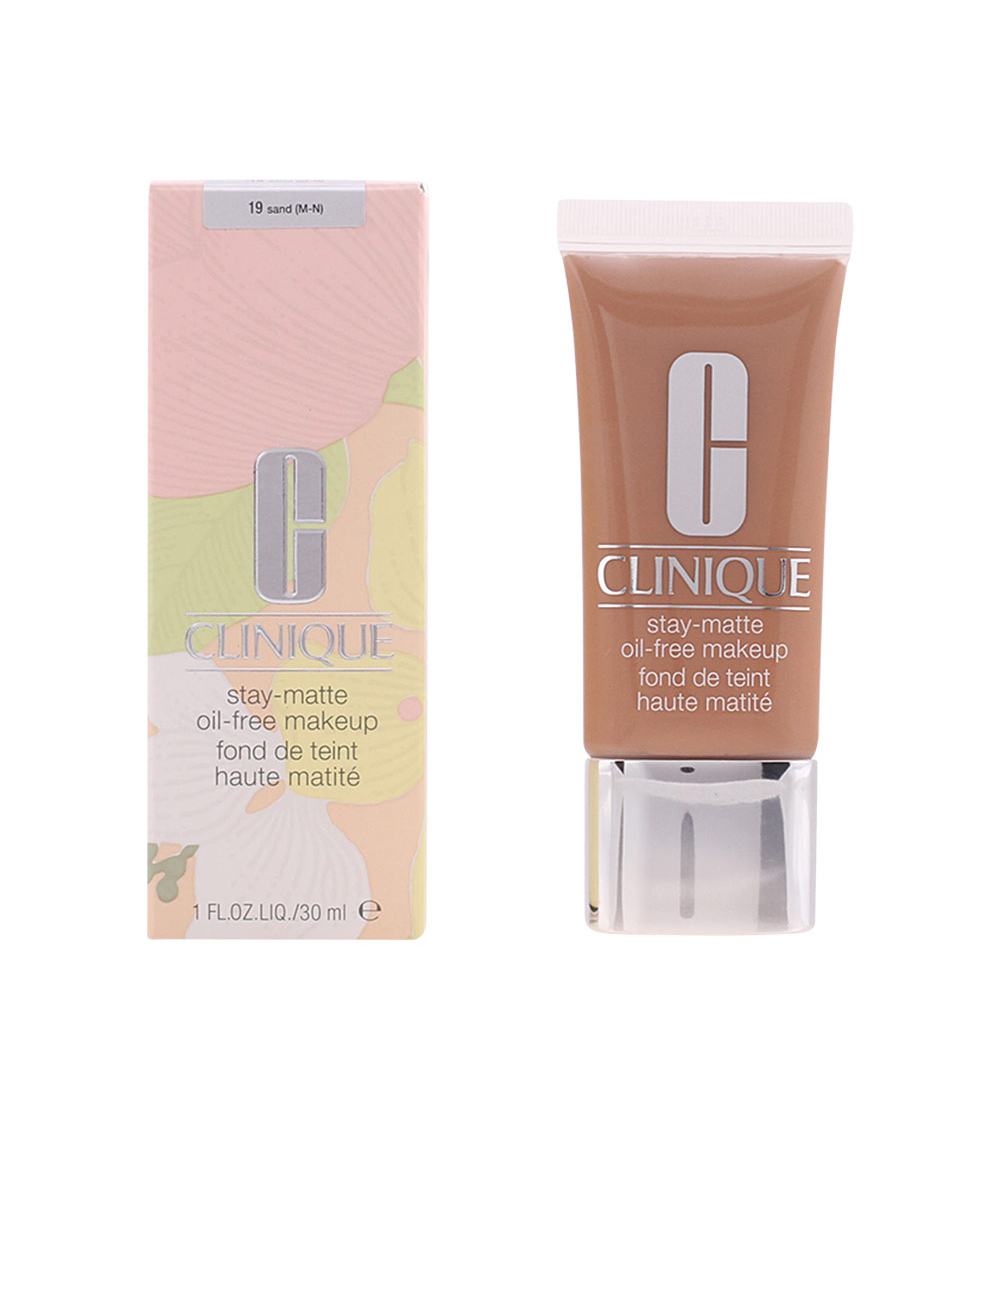 Clinique stay-matte oil-free makeup #19-sand